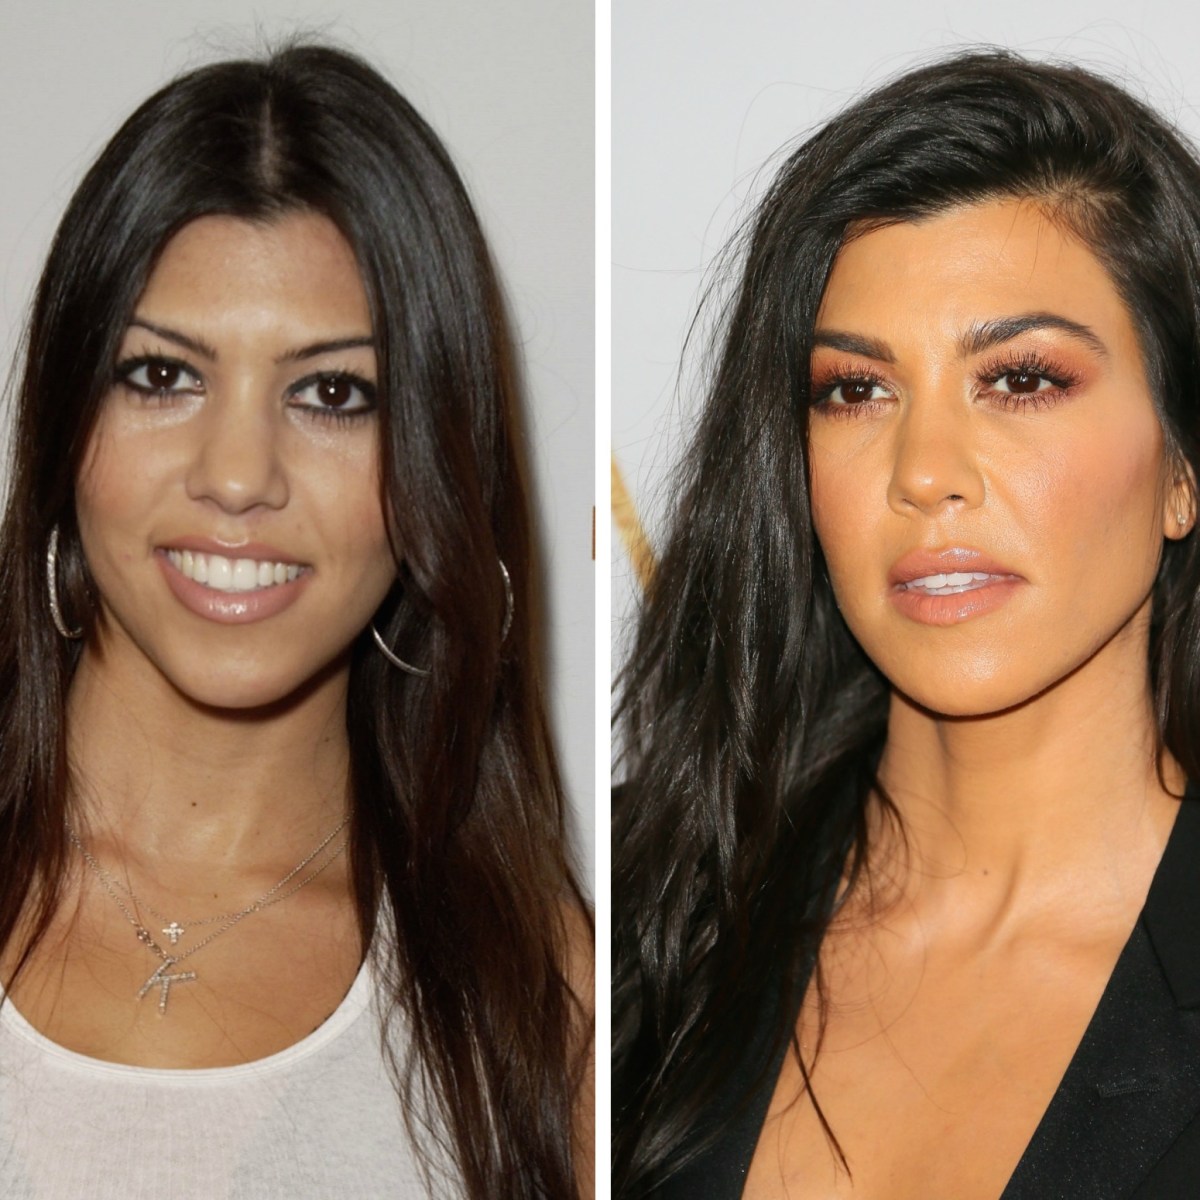 kourtney-kardashian-before-and-after-plastic-surgery.jpg